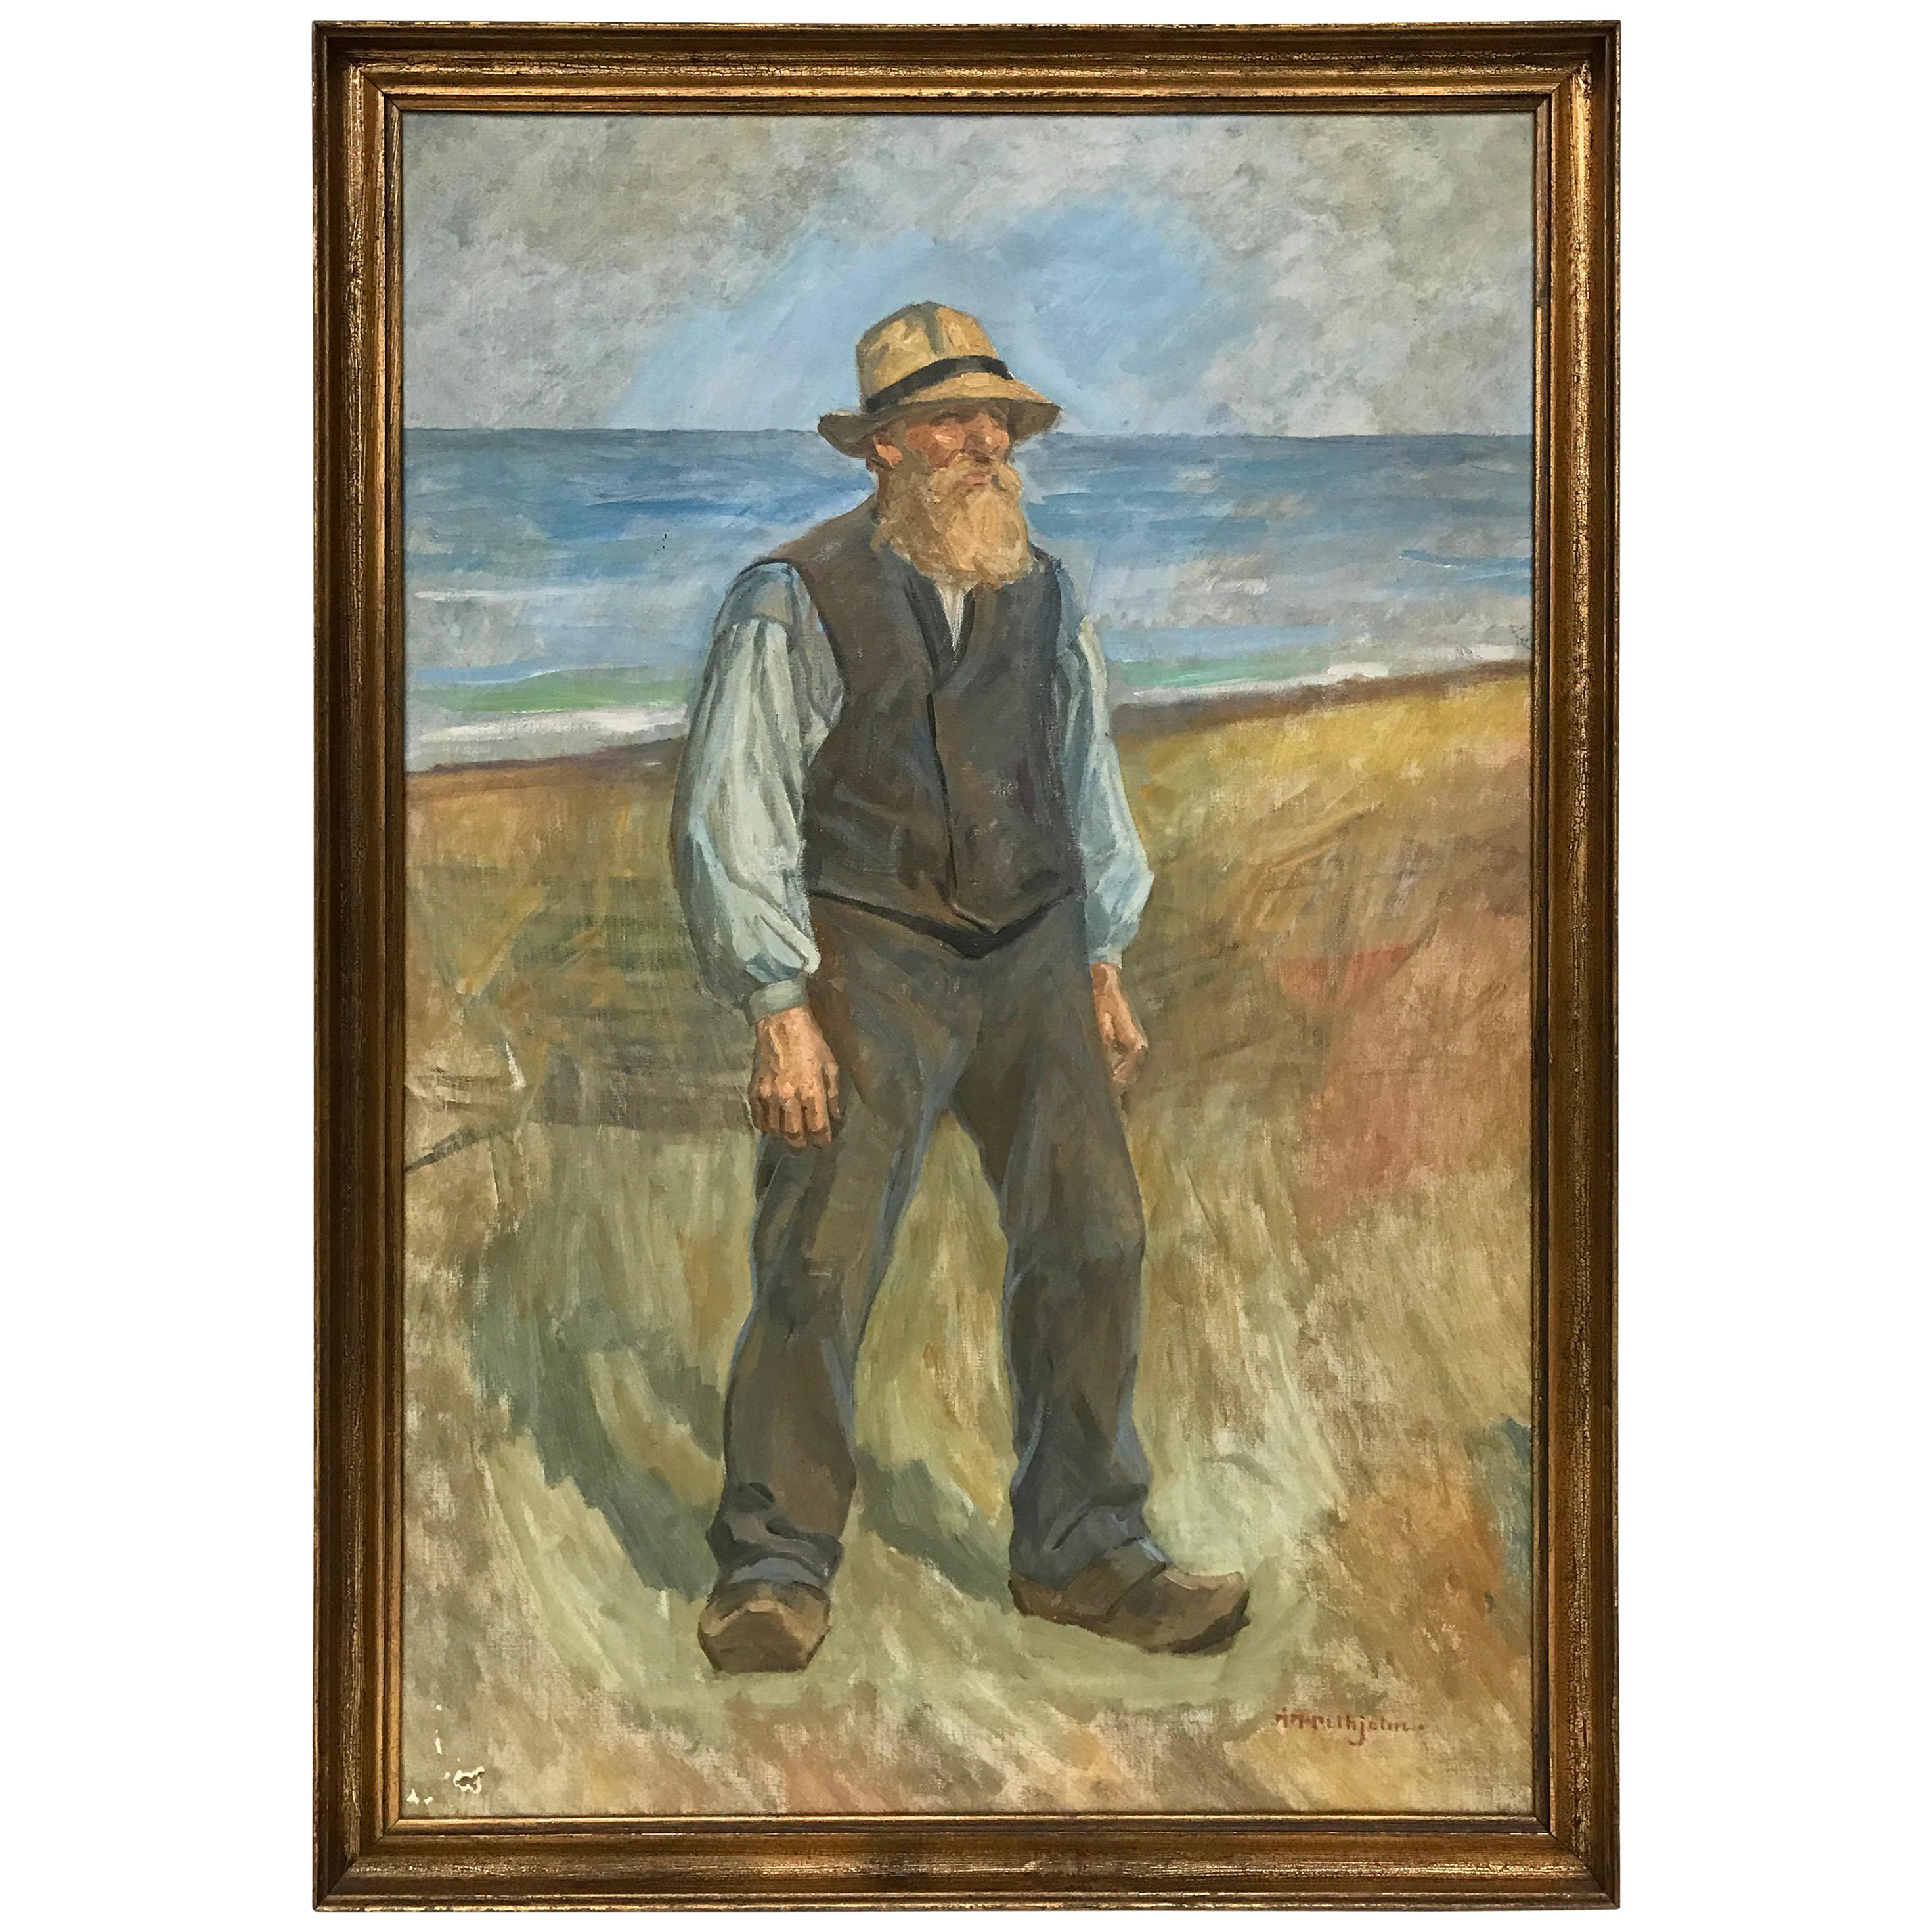 Johannes M. S. Wilhjelm, Fisherman on the Beach, 1900s